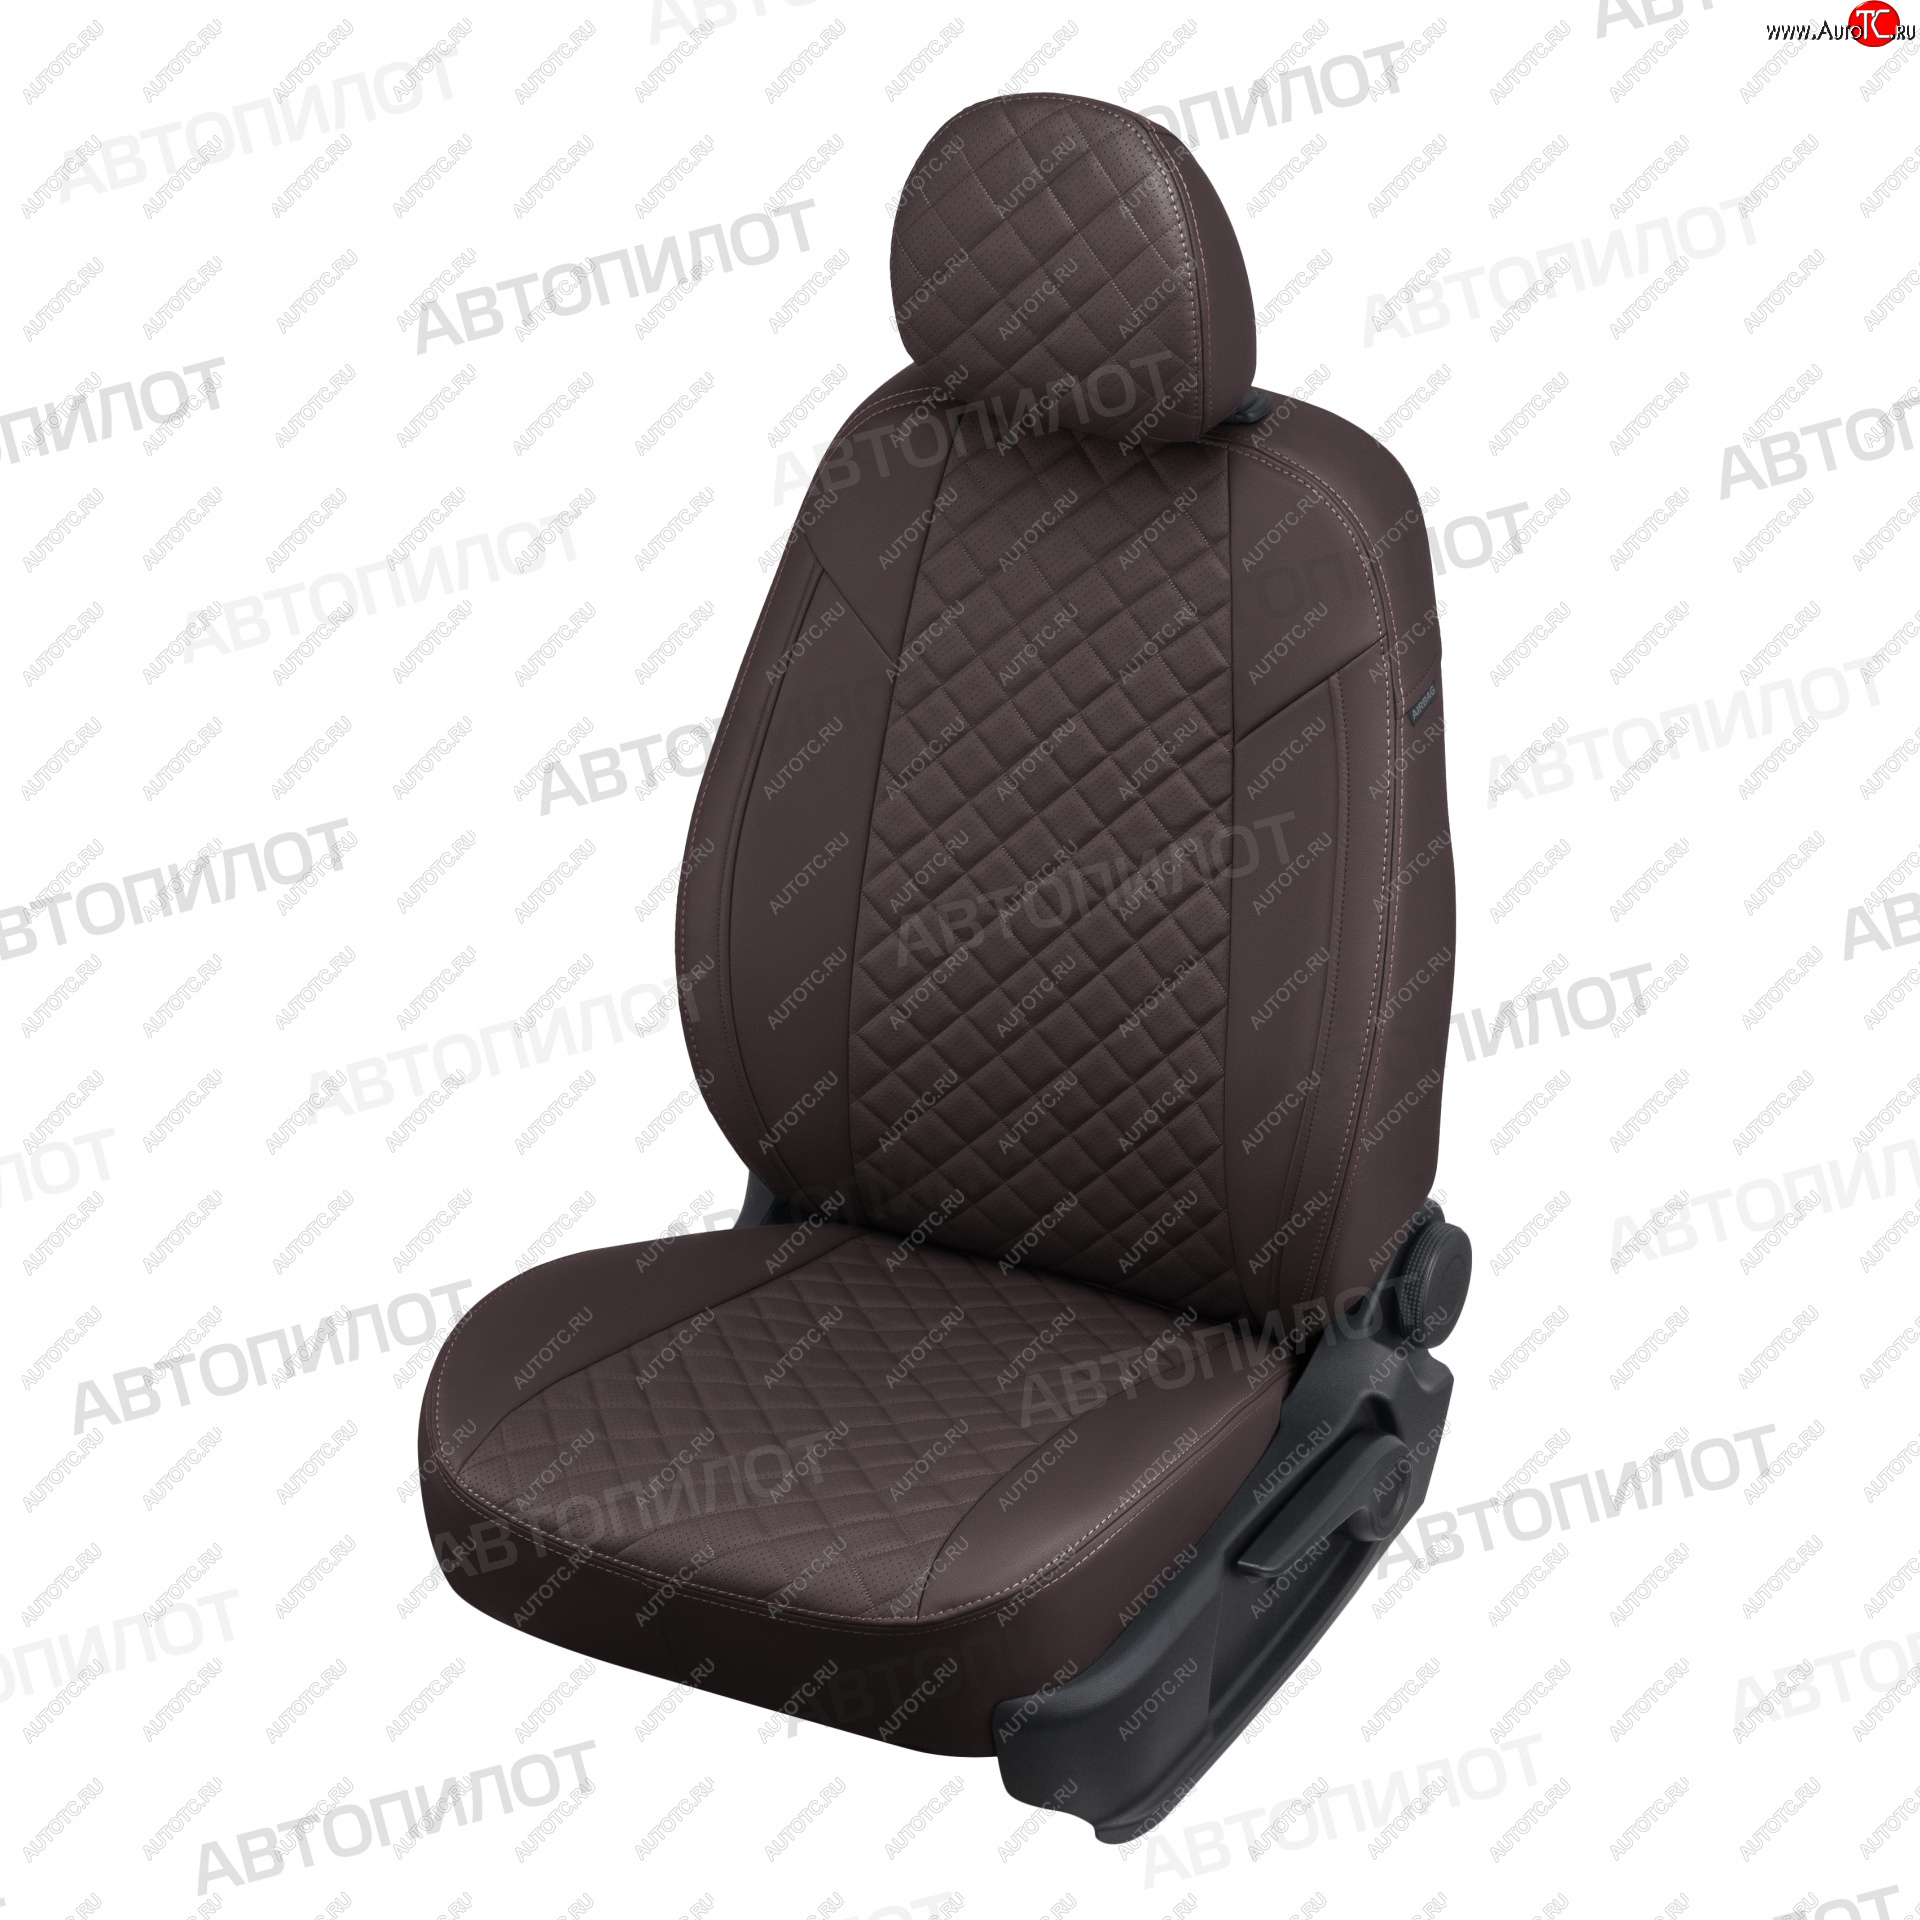 21 599 р. Чехлы сидений (9 мест, экокожа) Автопилот Ромб  Ford Transit  3 (2006-2014) (шоколад)